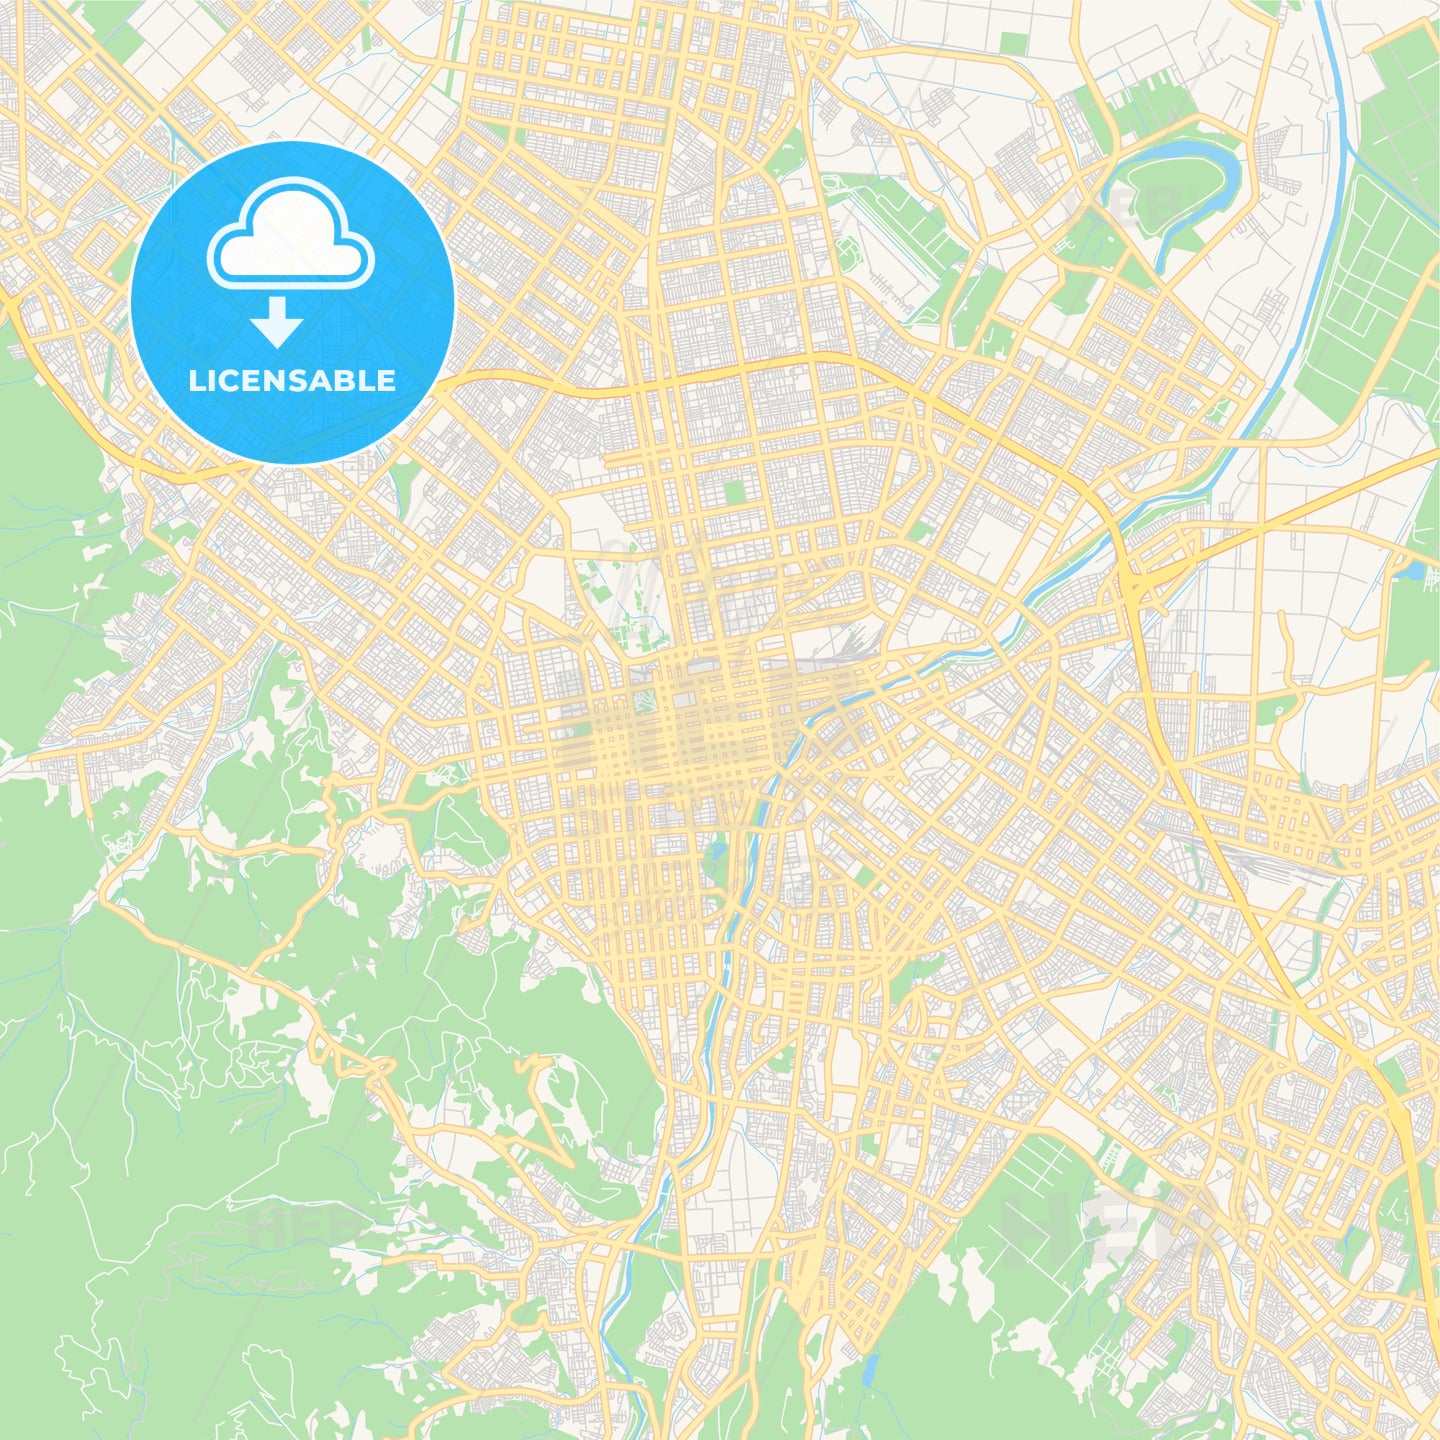 Printable street map of Sapporo, Japan